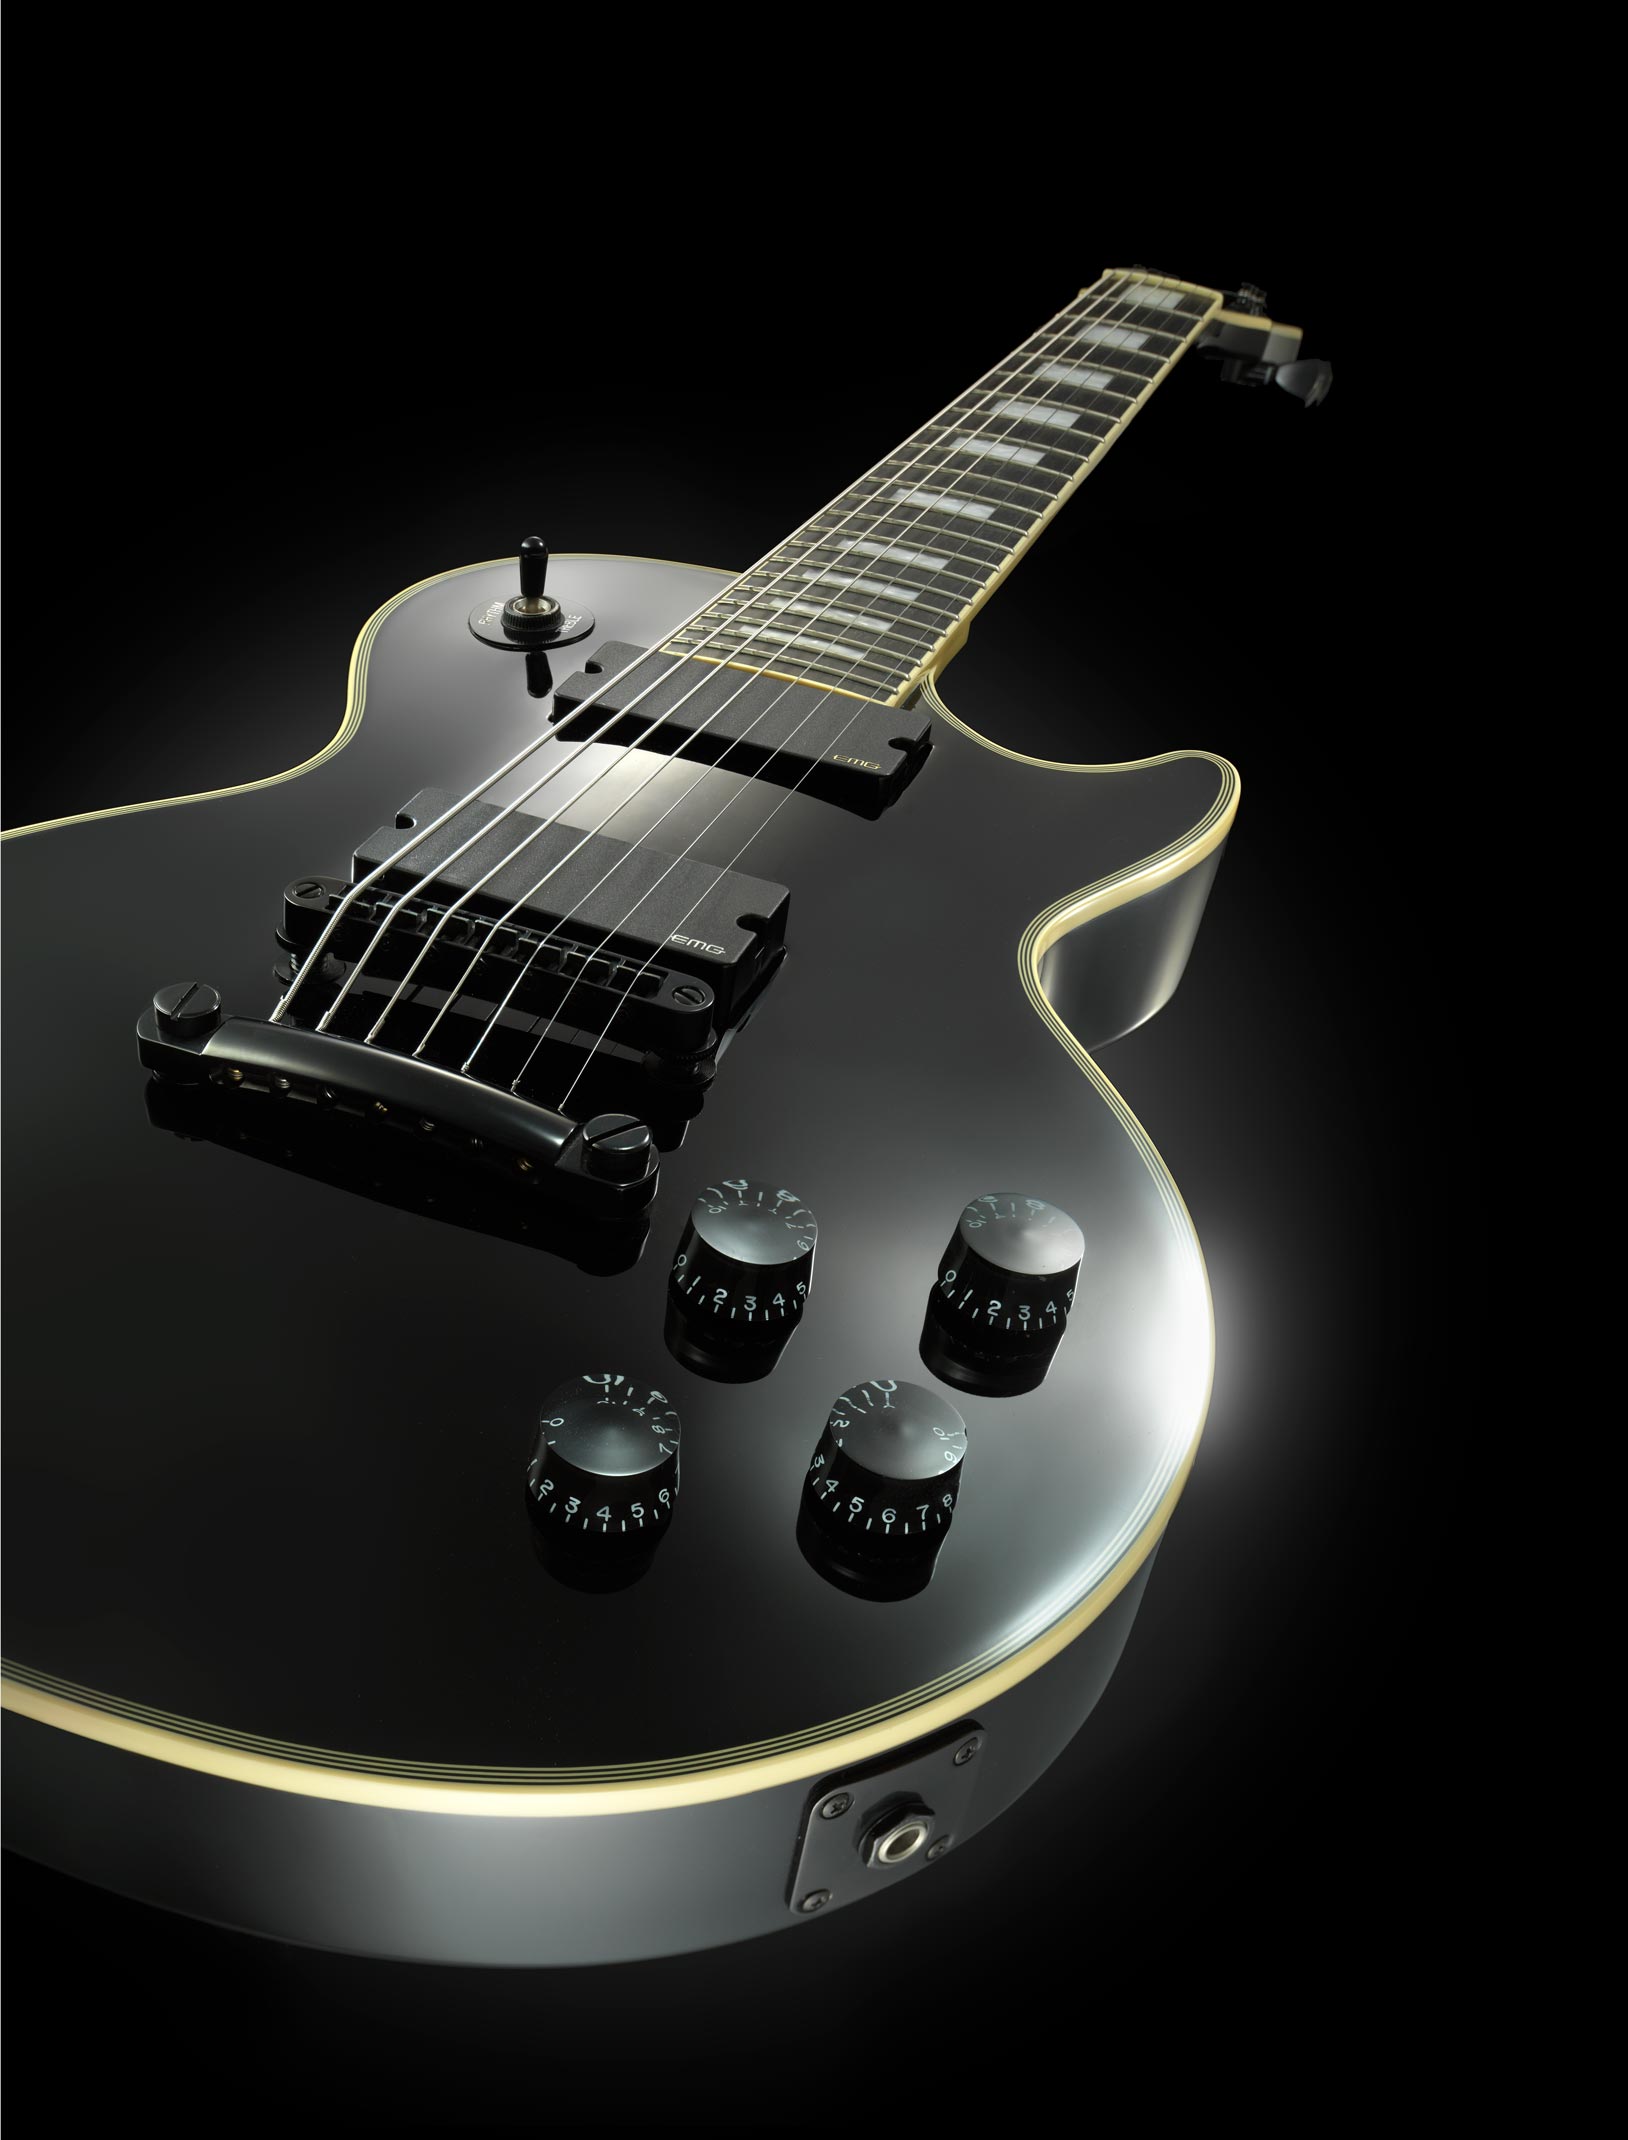 Black electric guitar on a black background